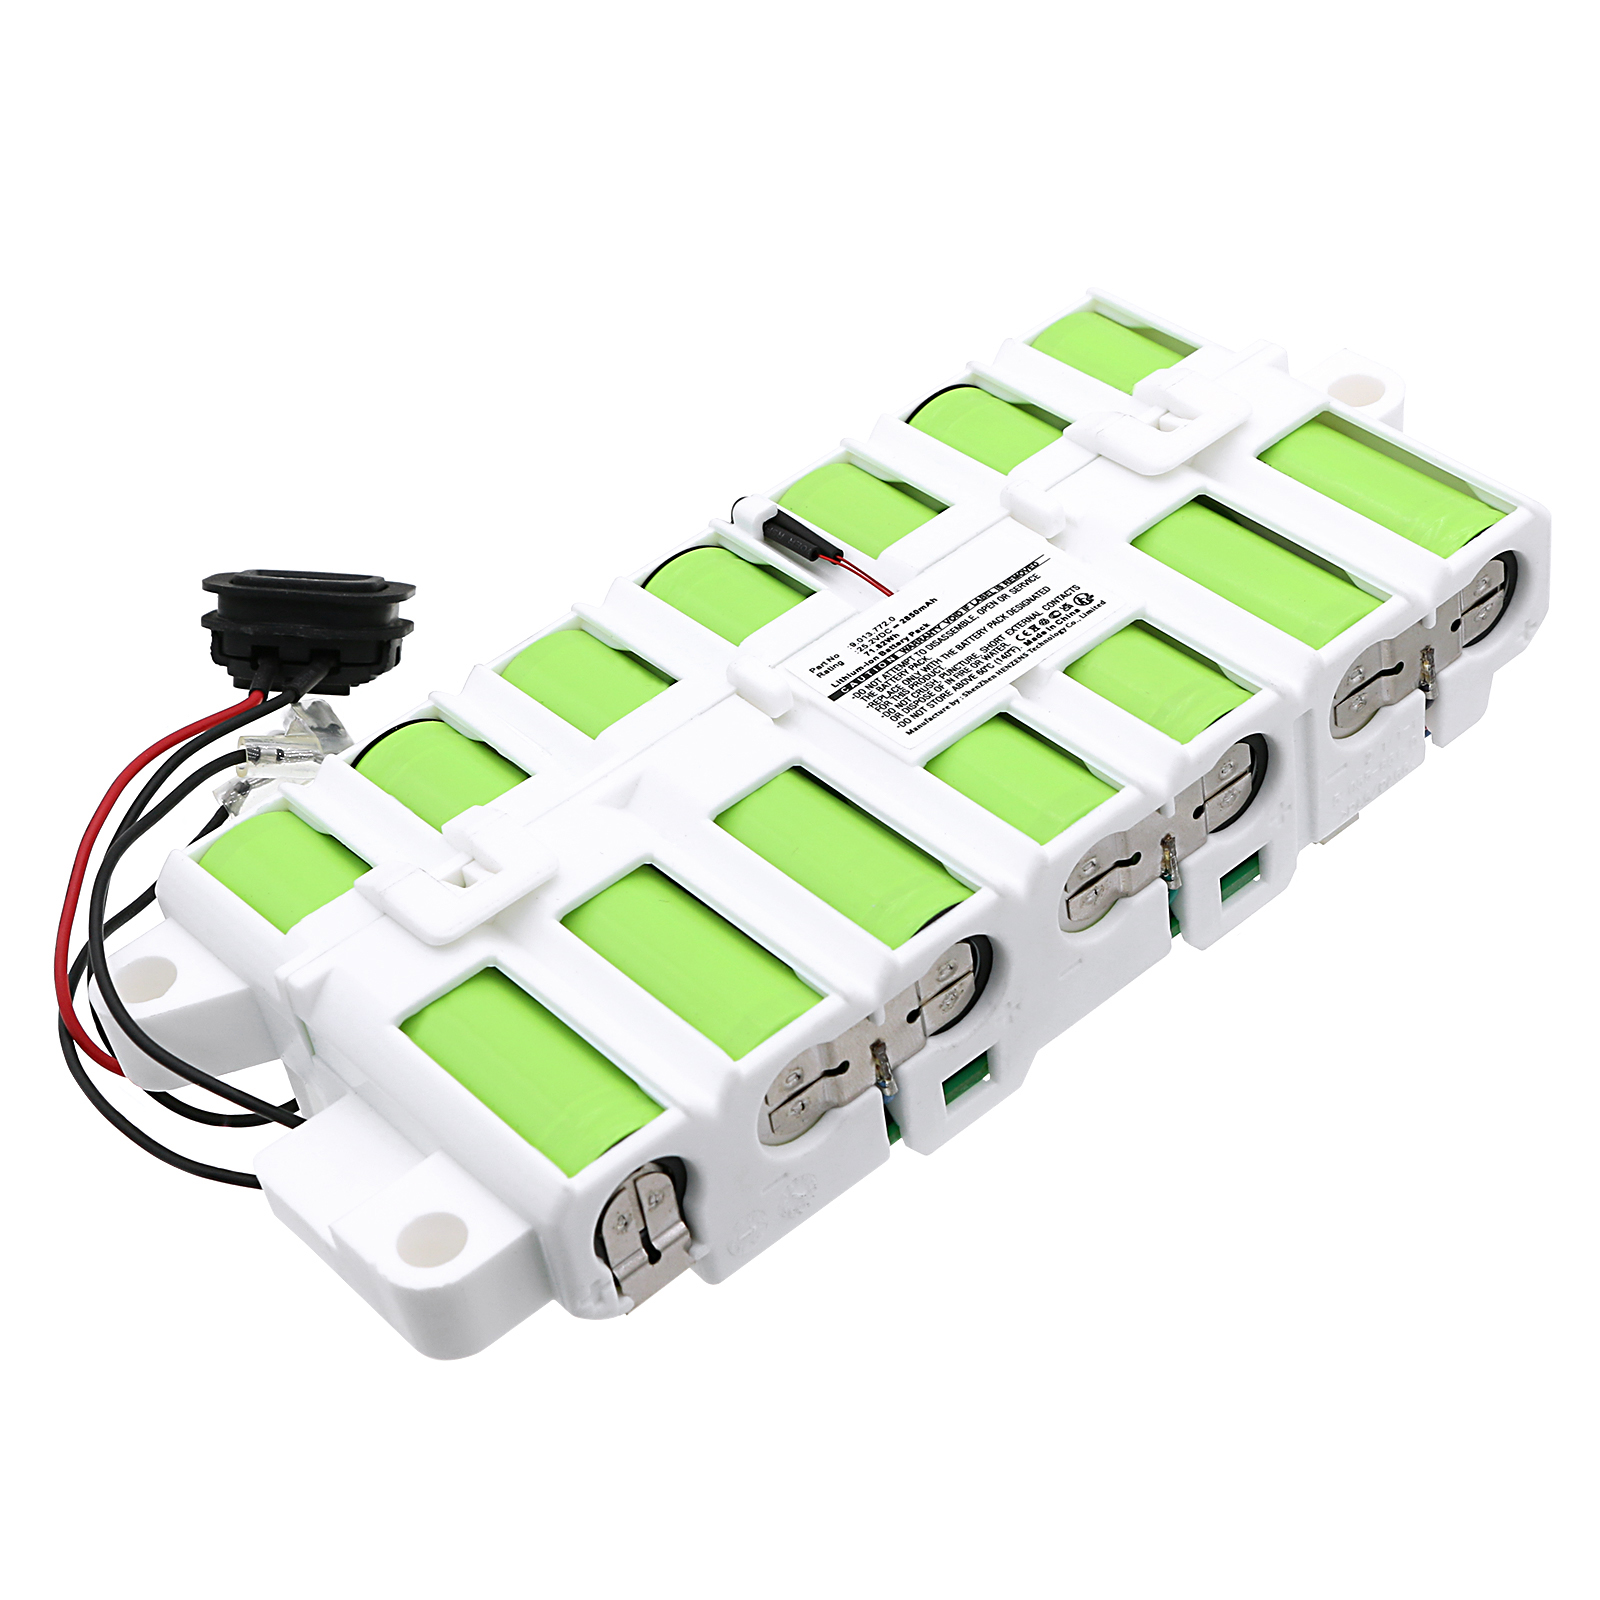 Synergy Digital Vacuum Cleaner Battery, Compatible with Karcher 9.013.772.0 Vacuum Cleaner Battery (Li-ion, 25.2V, 2850mAh)